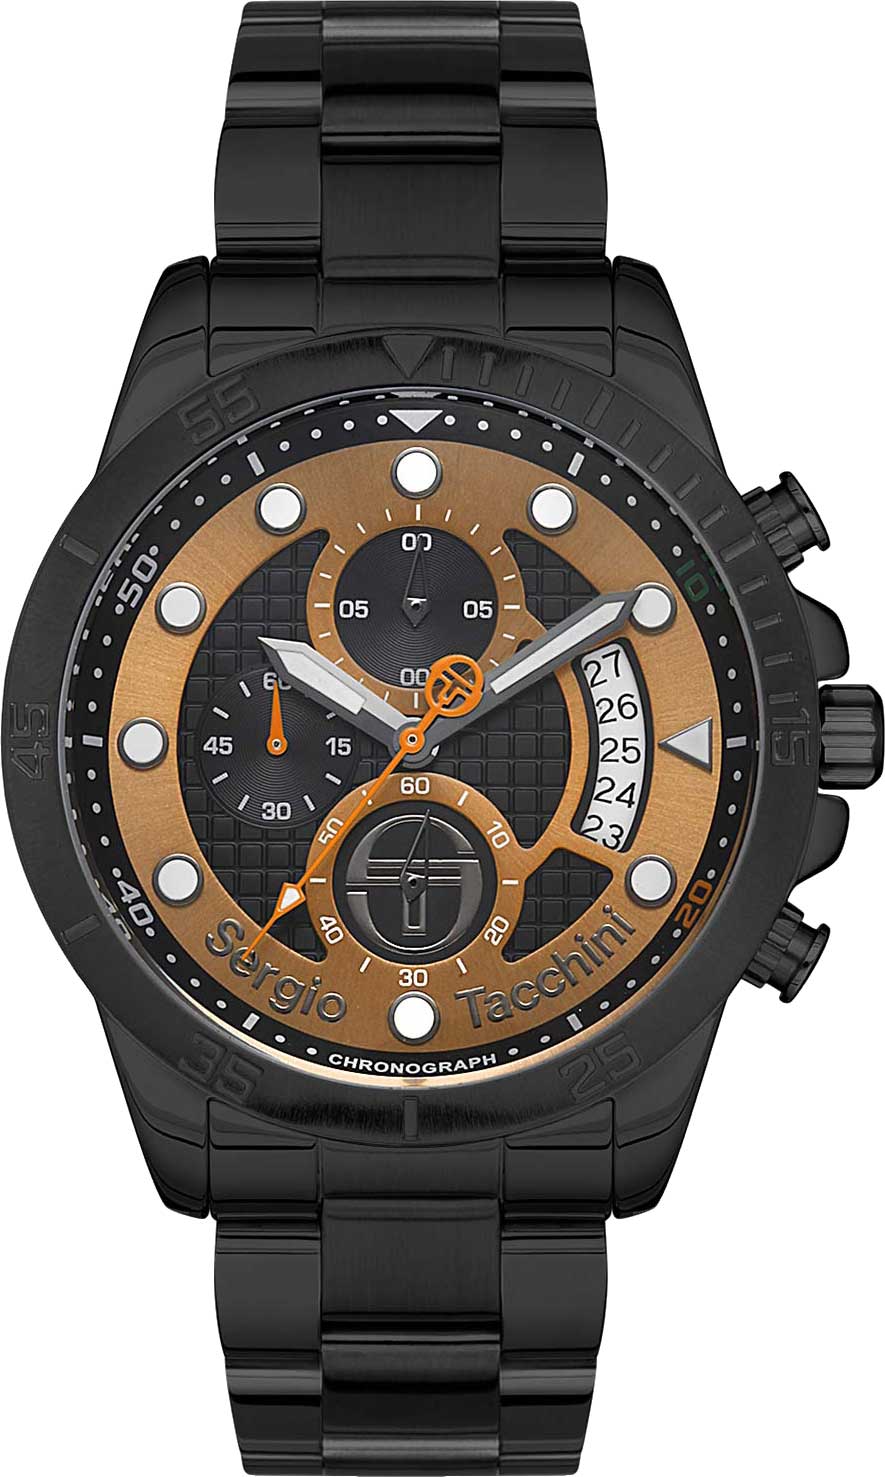 Наручные часы Sergio Tacchini ST.1.10202-5 с хронографом